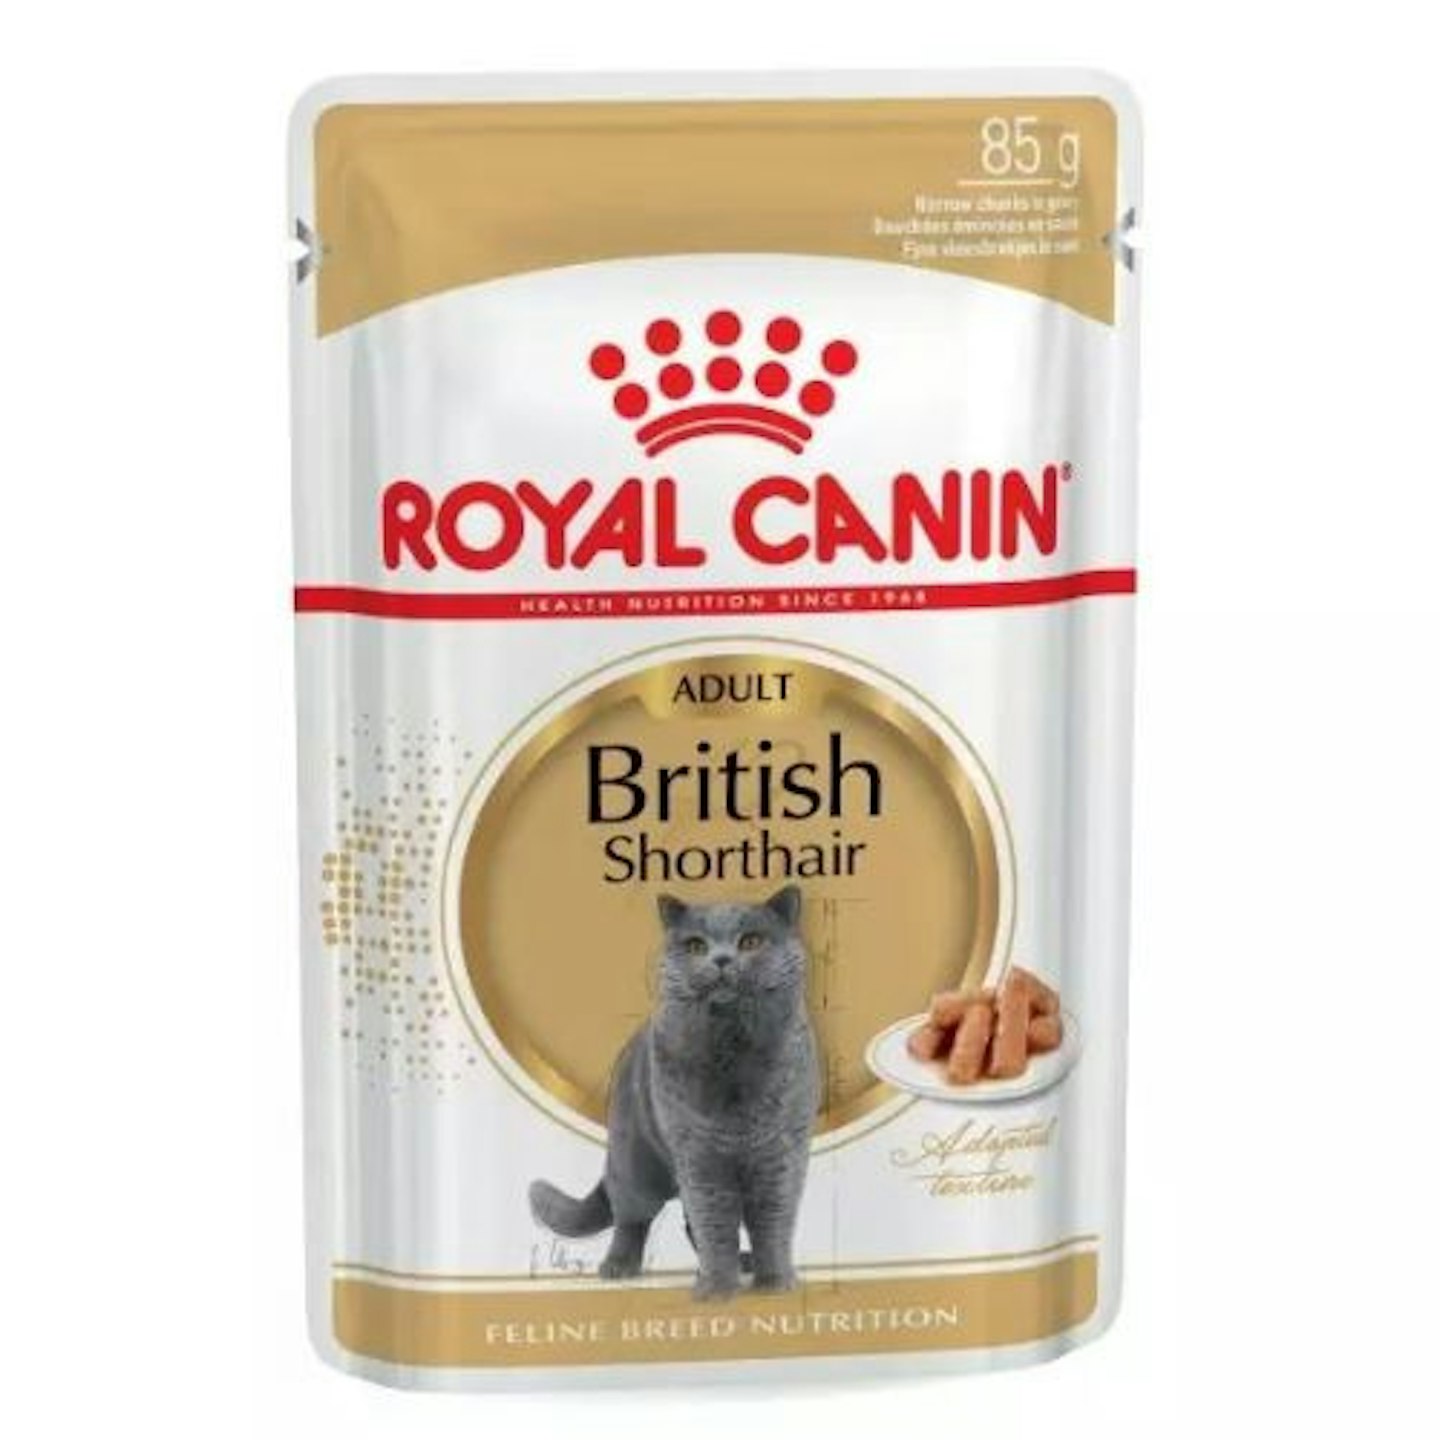 Royal Canin British Shorthair Adult Cat Wet Food